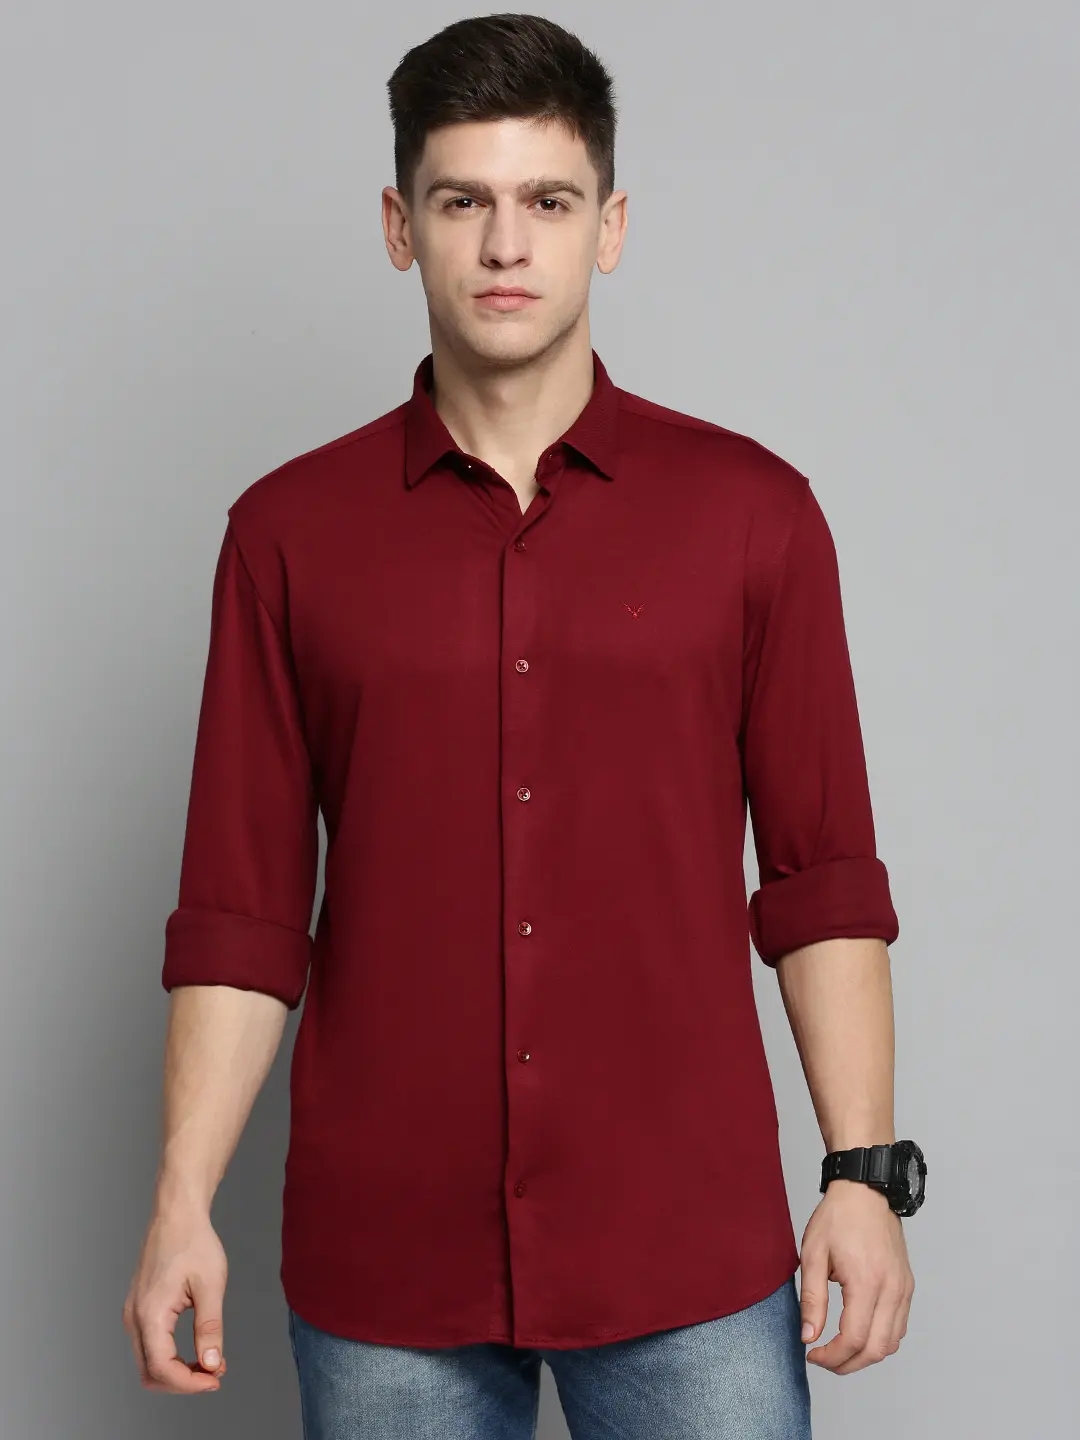 SHOWOFF Men's Spread Collar Maroon Solid Shirt